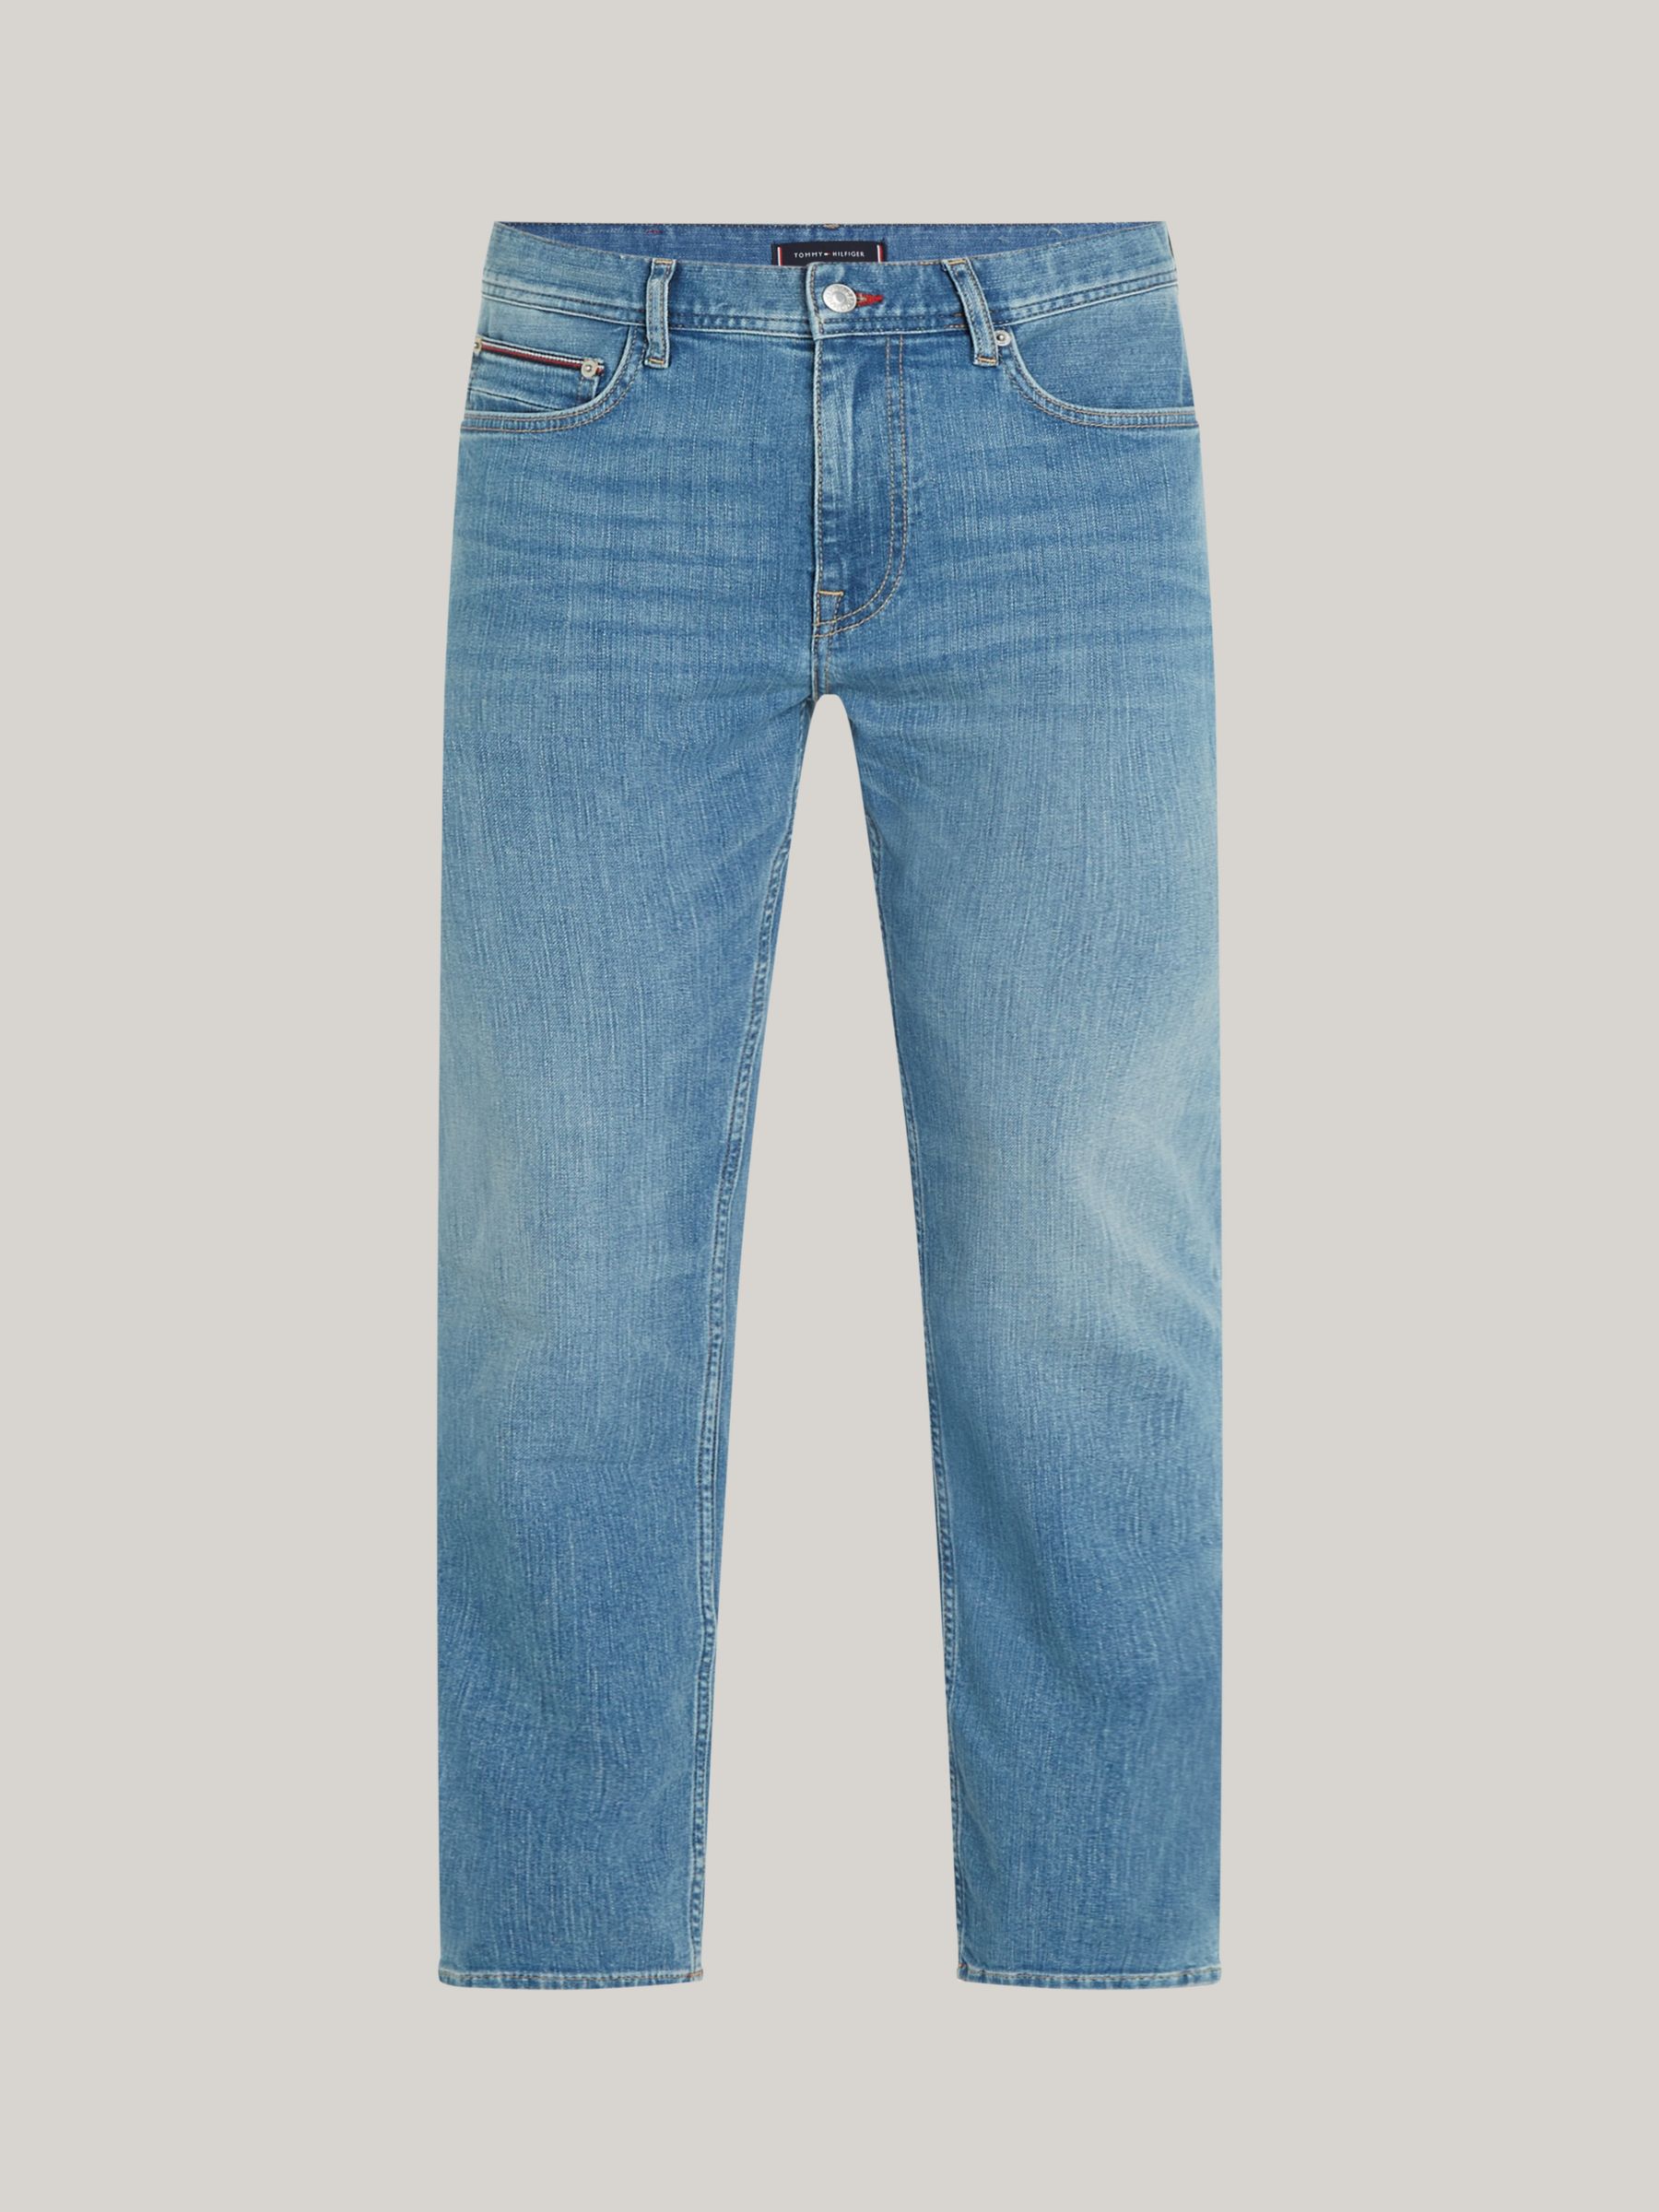 Tommy Hilfiger Denton Straight Jeans, Blue, 30R